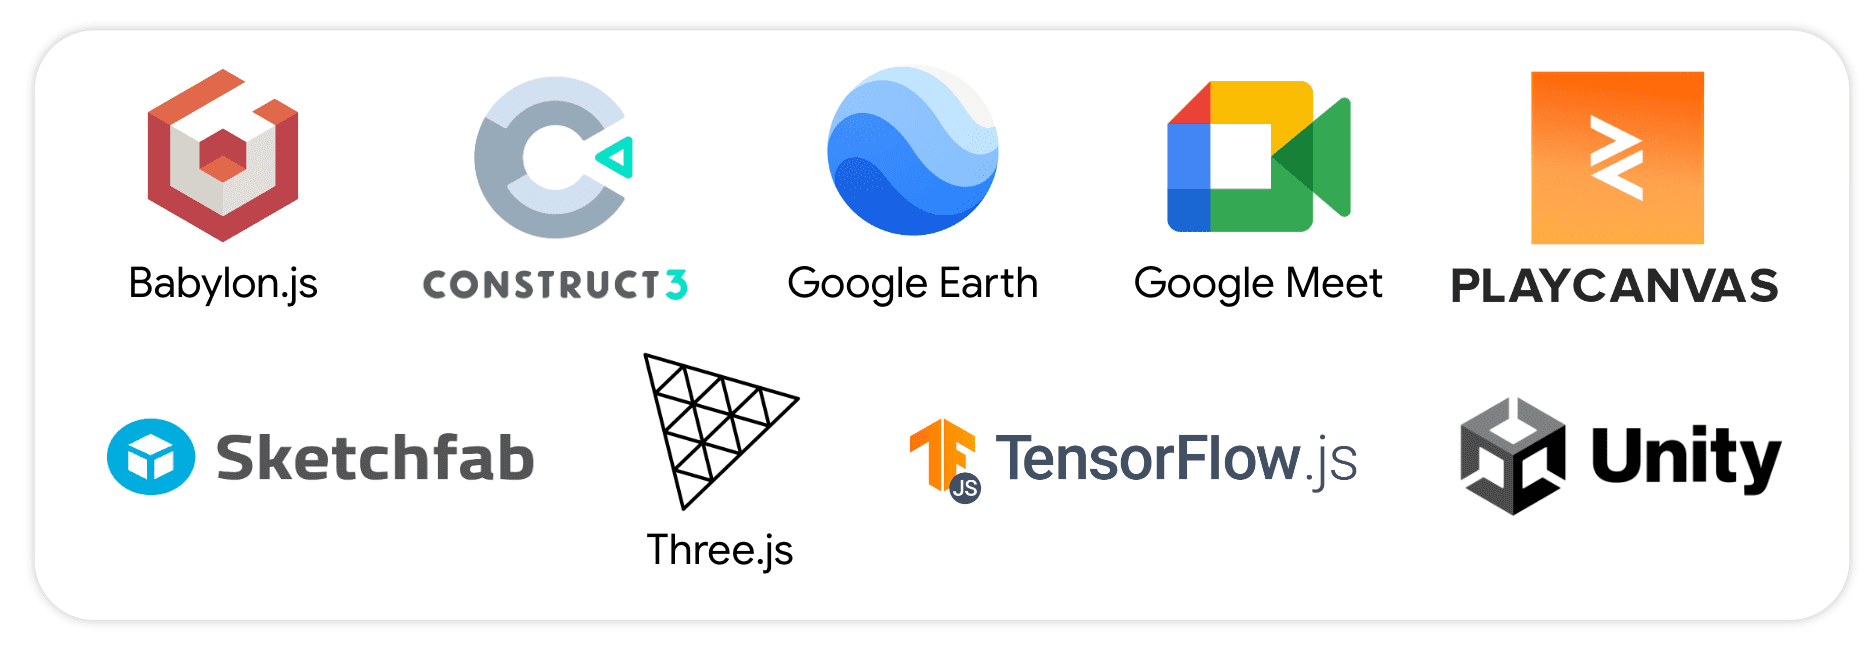 Babylon.js, Construct 3, Google Earth, Google Meet, PlayCanvas, Sketchfab, Three.JS, TensorFlow.js и Unity.